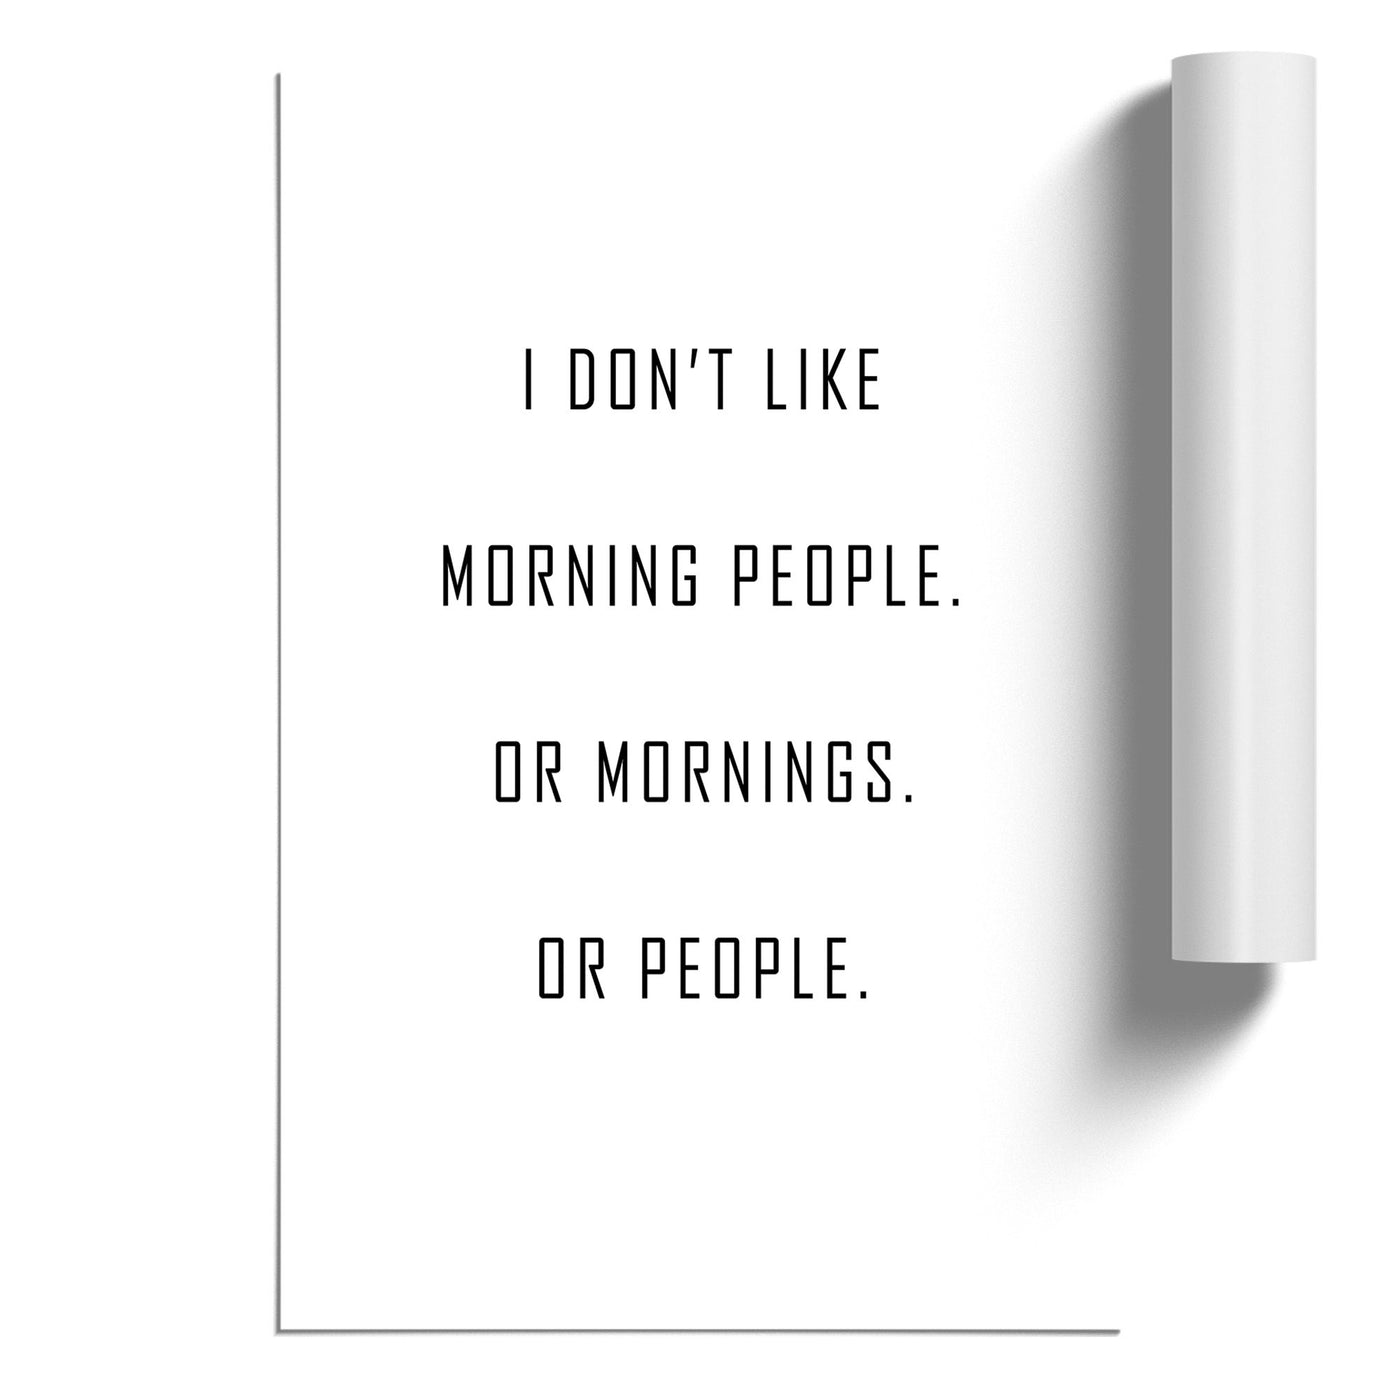 Morning People